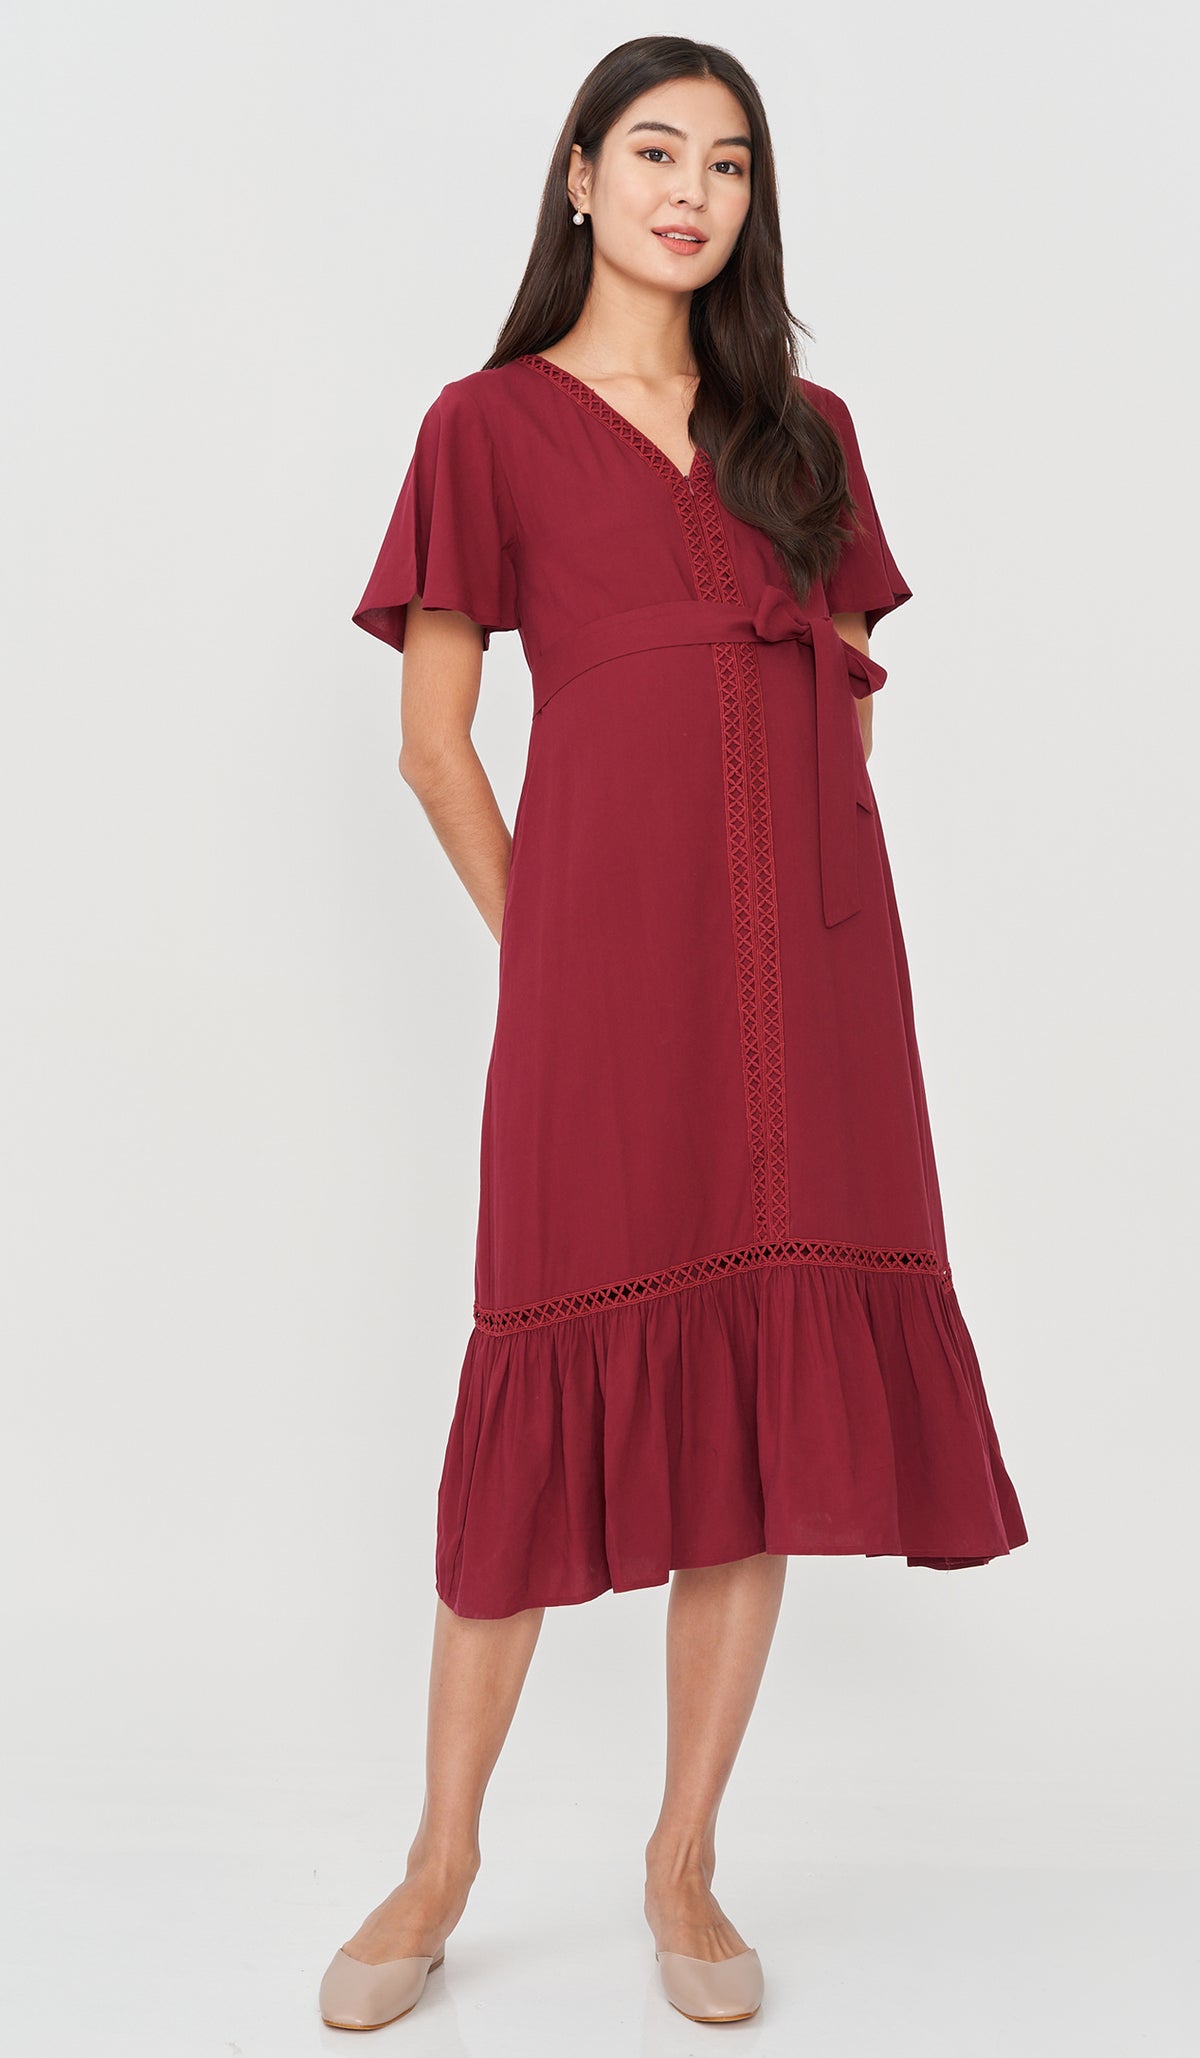 CAROLLE CROCHET TRIM NURSING DRESS RED